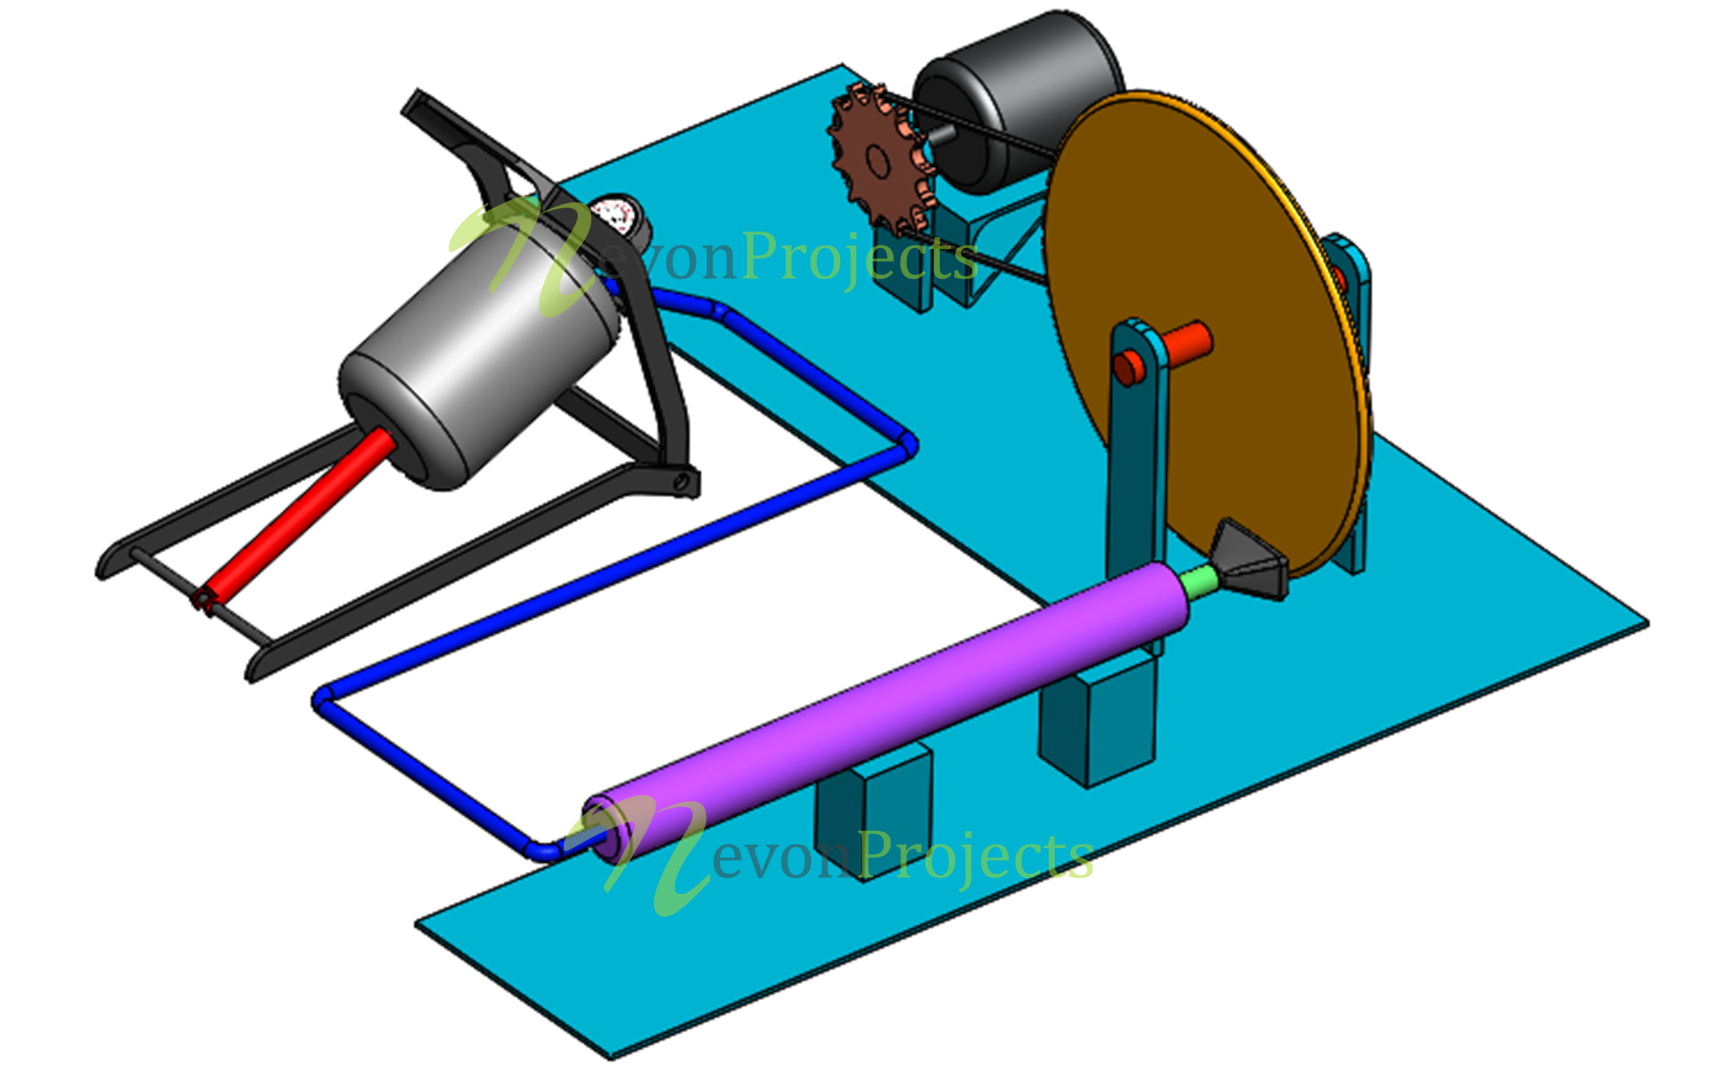 Pedal based pneumatic braking project